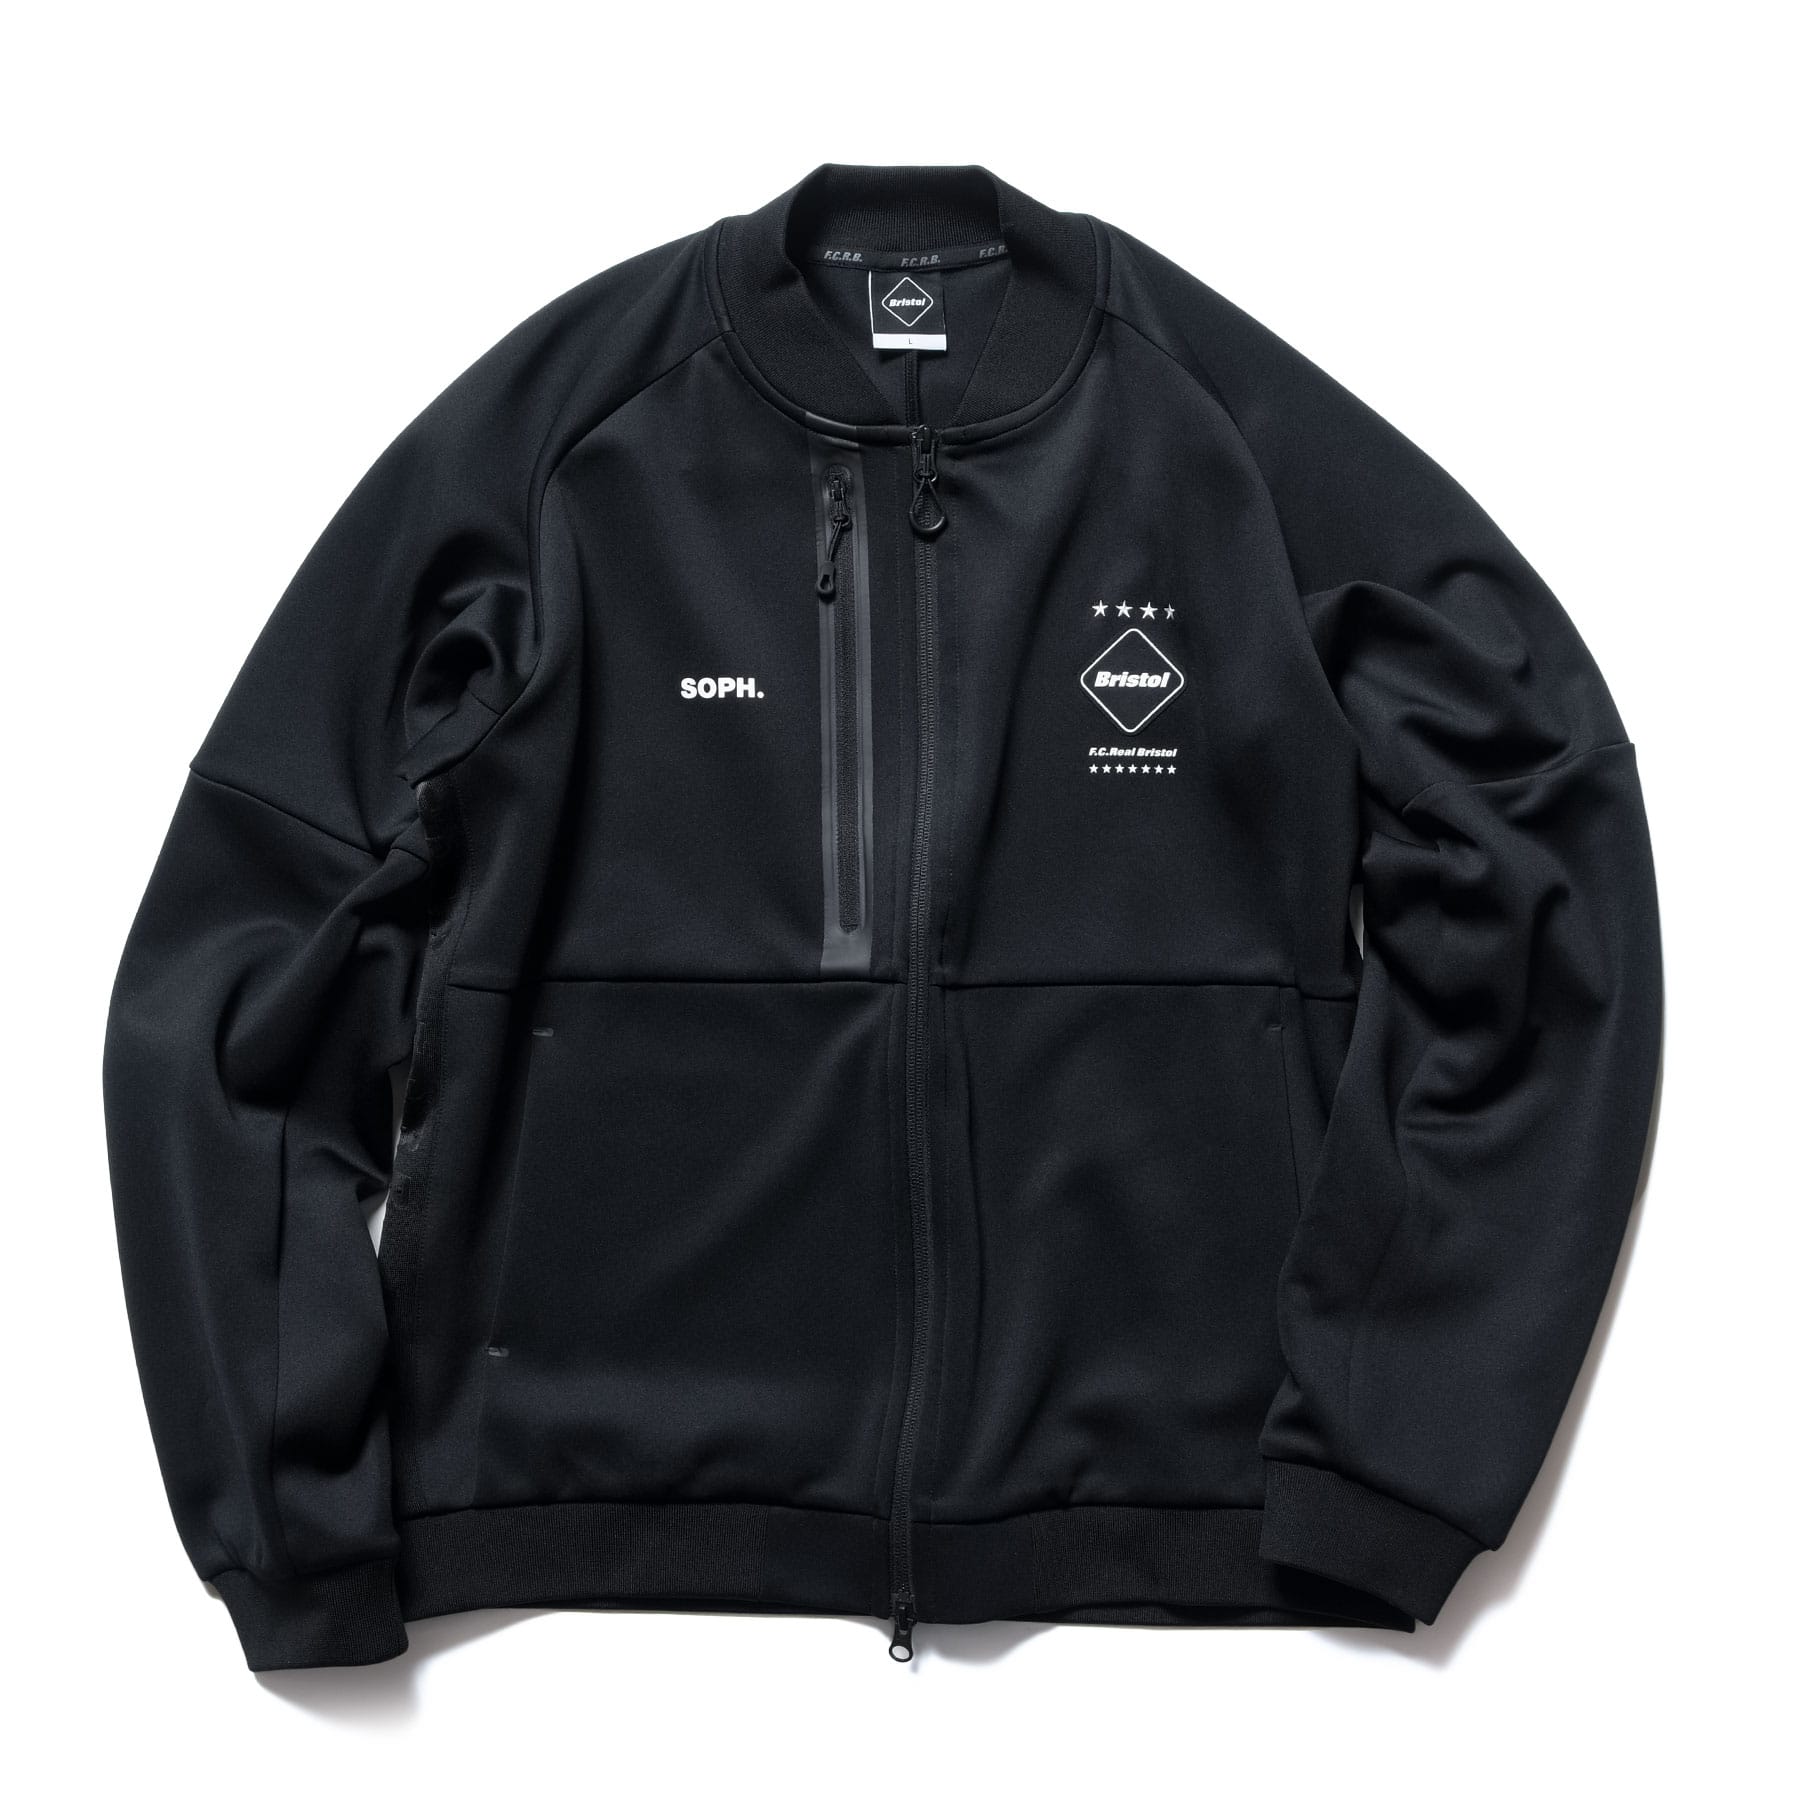 FCRB×Coca-Cola jacket 黒M